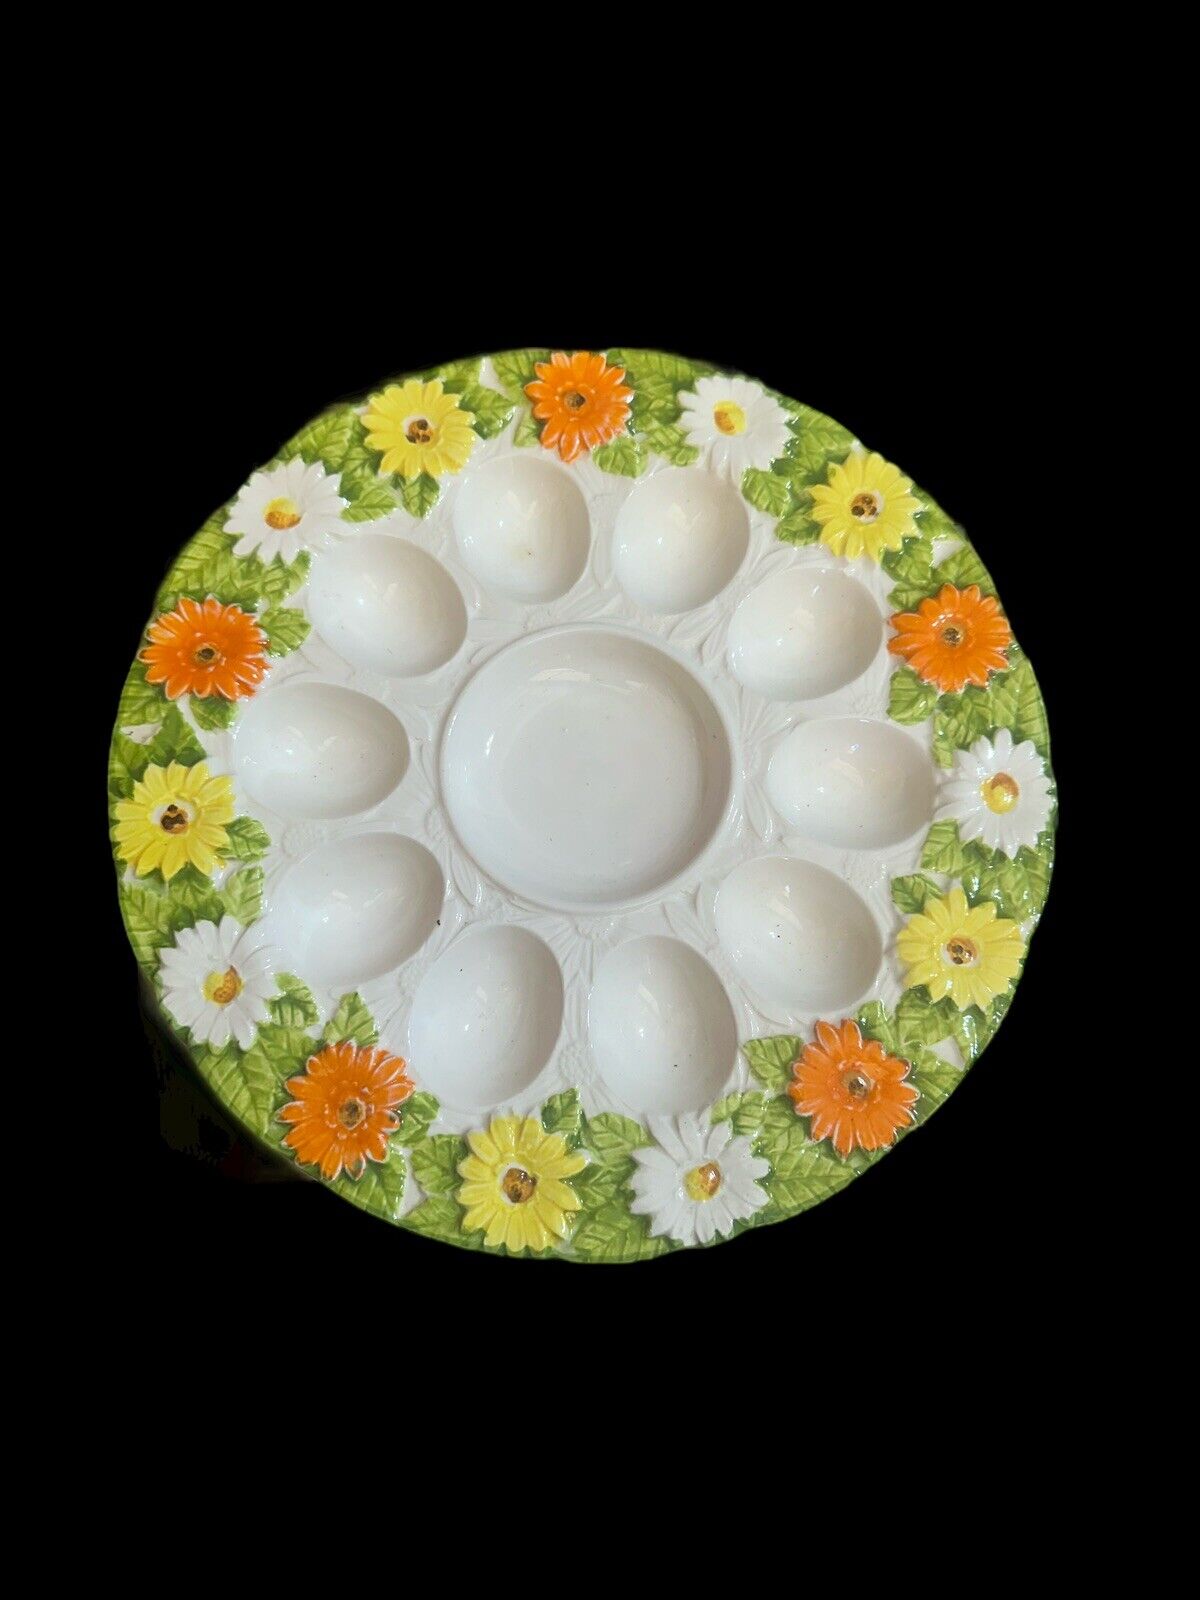 Vintage Lefton Deviled Egg Tray White,Orange,Yellow Details Ceramic Original Tag